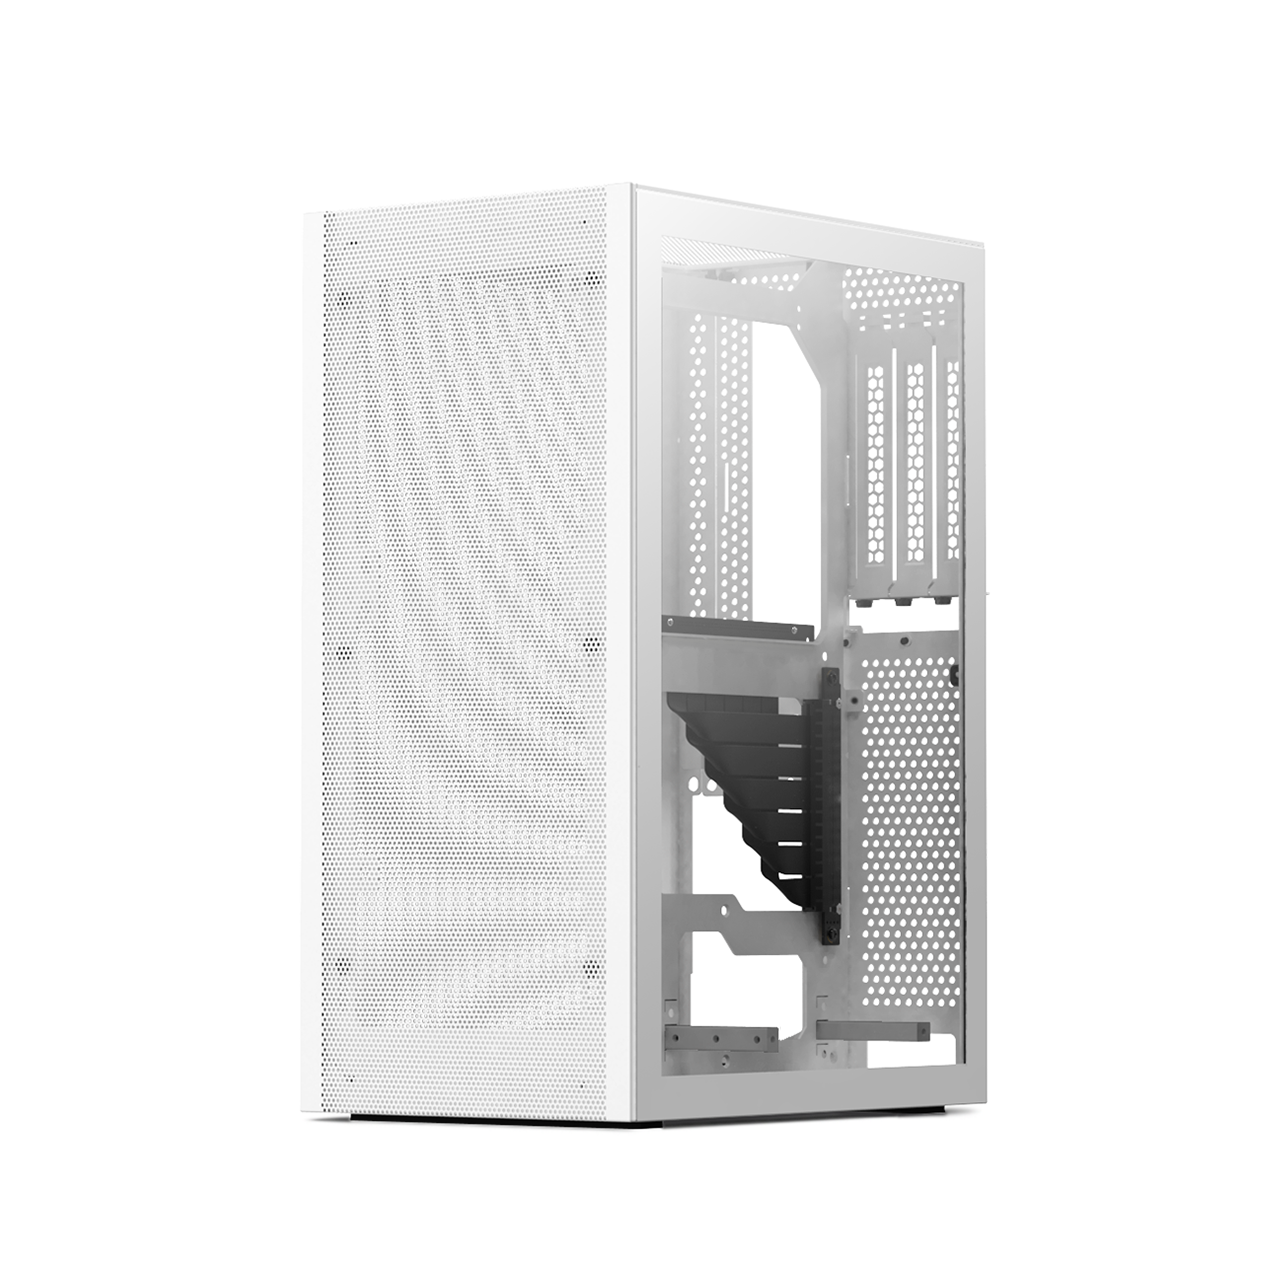 Meshlicious Mini-ITX/ Mini-DTX mid tower pc case | Ssupd